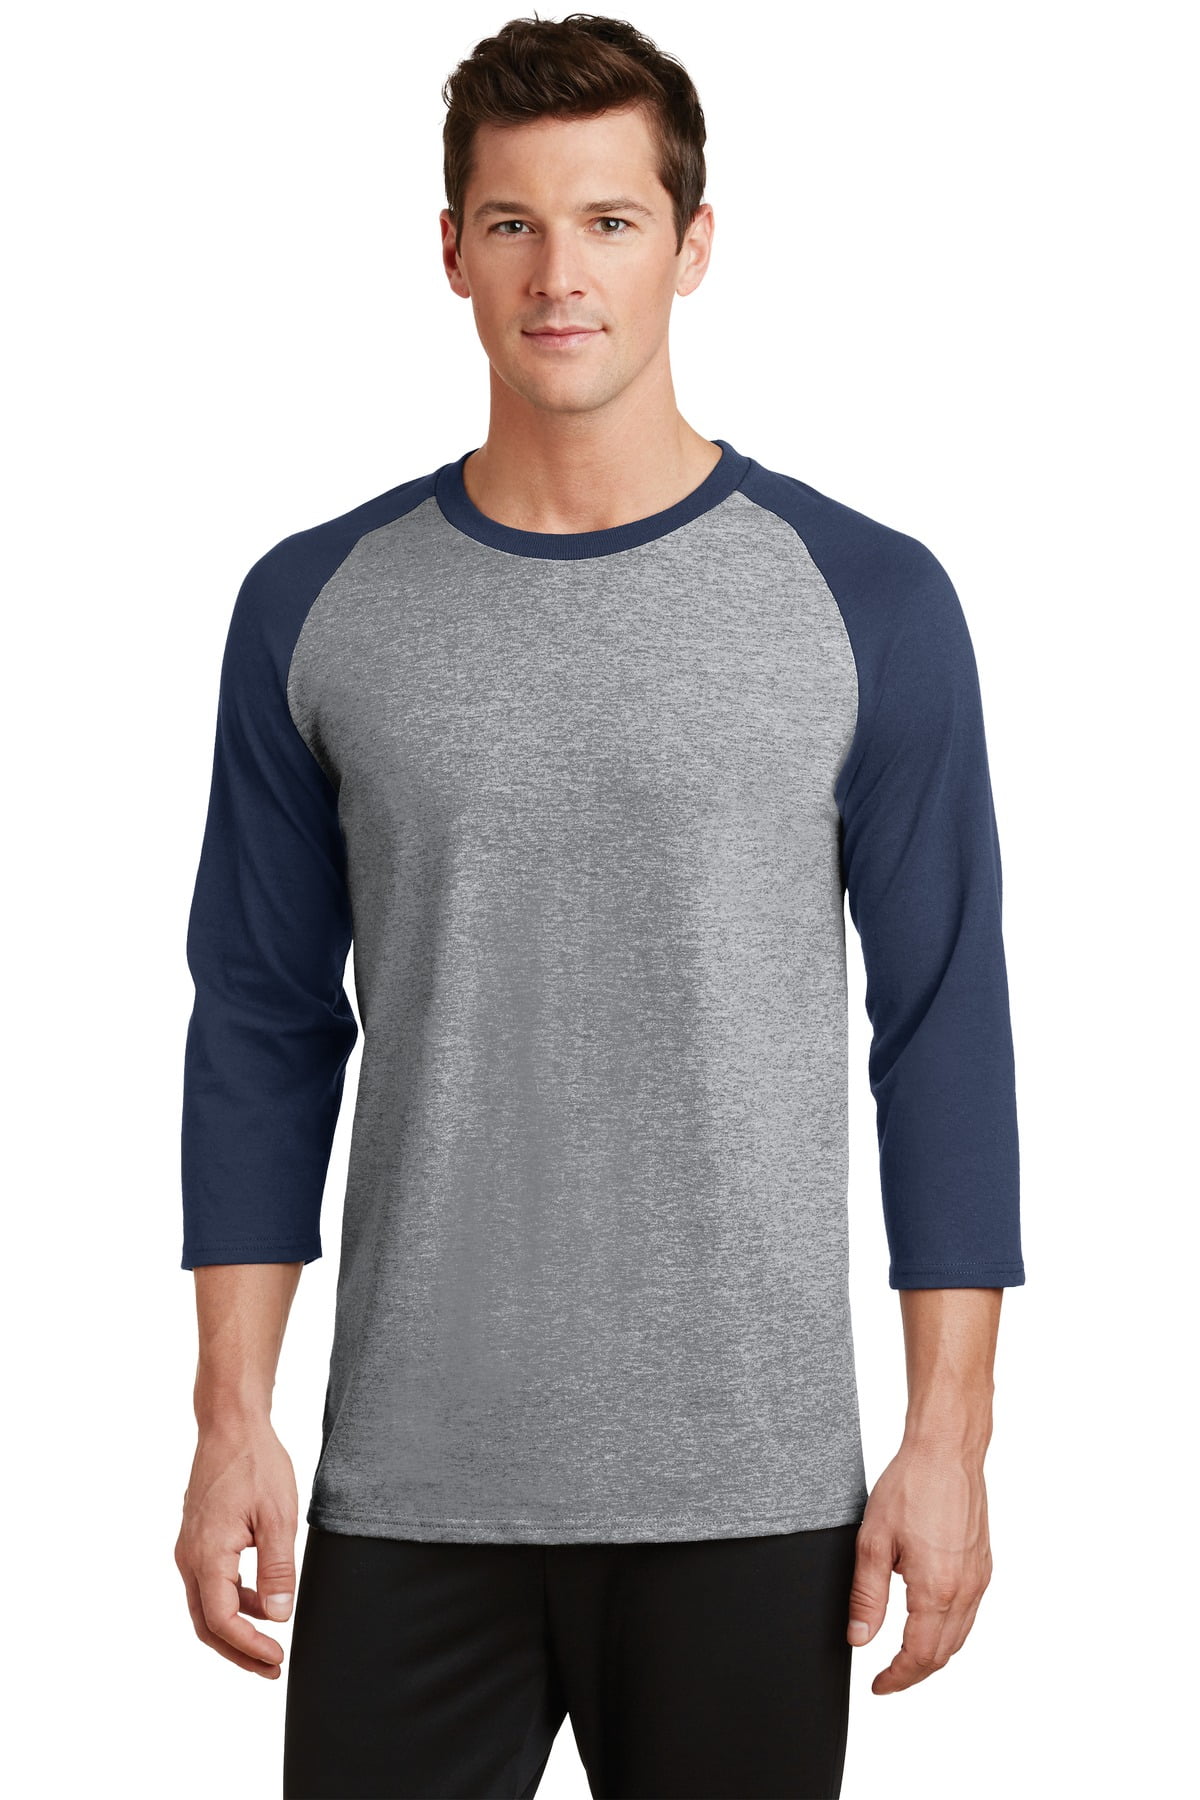 Mens Raglan T Shirts Baseball Tee 3/4 Sleeve Casual Active Plain Solid Sports 